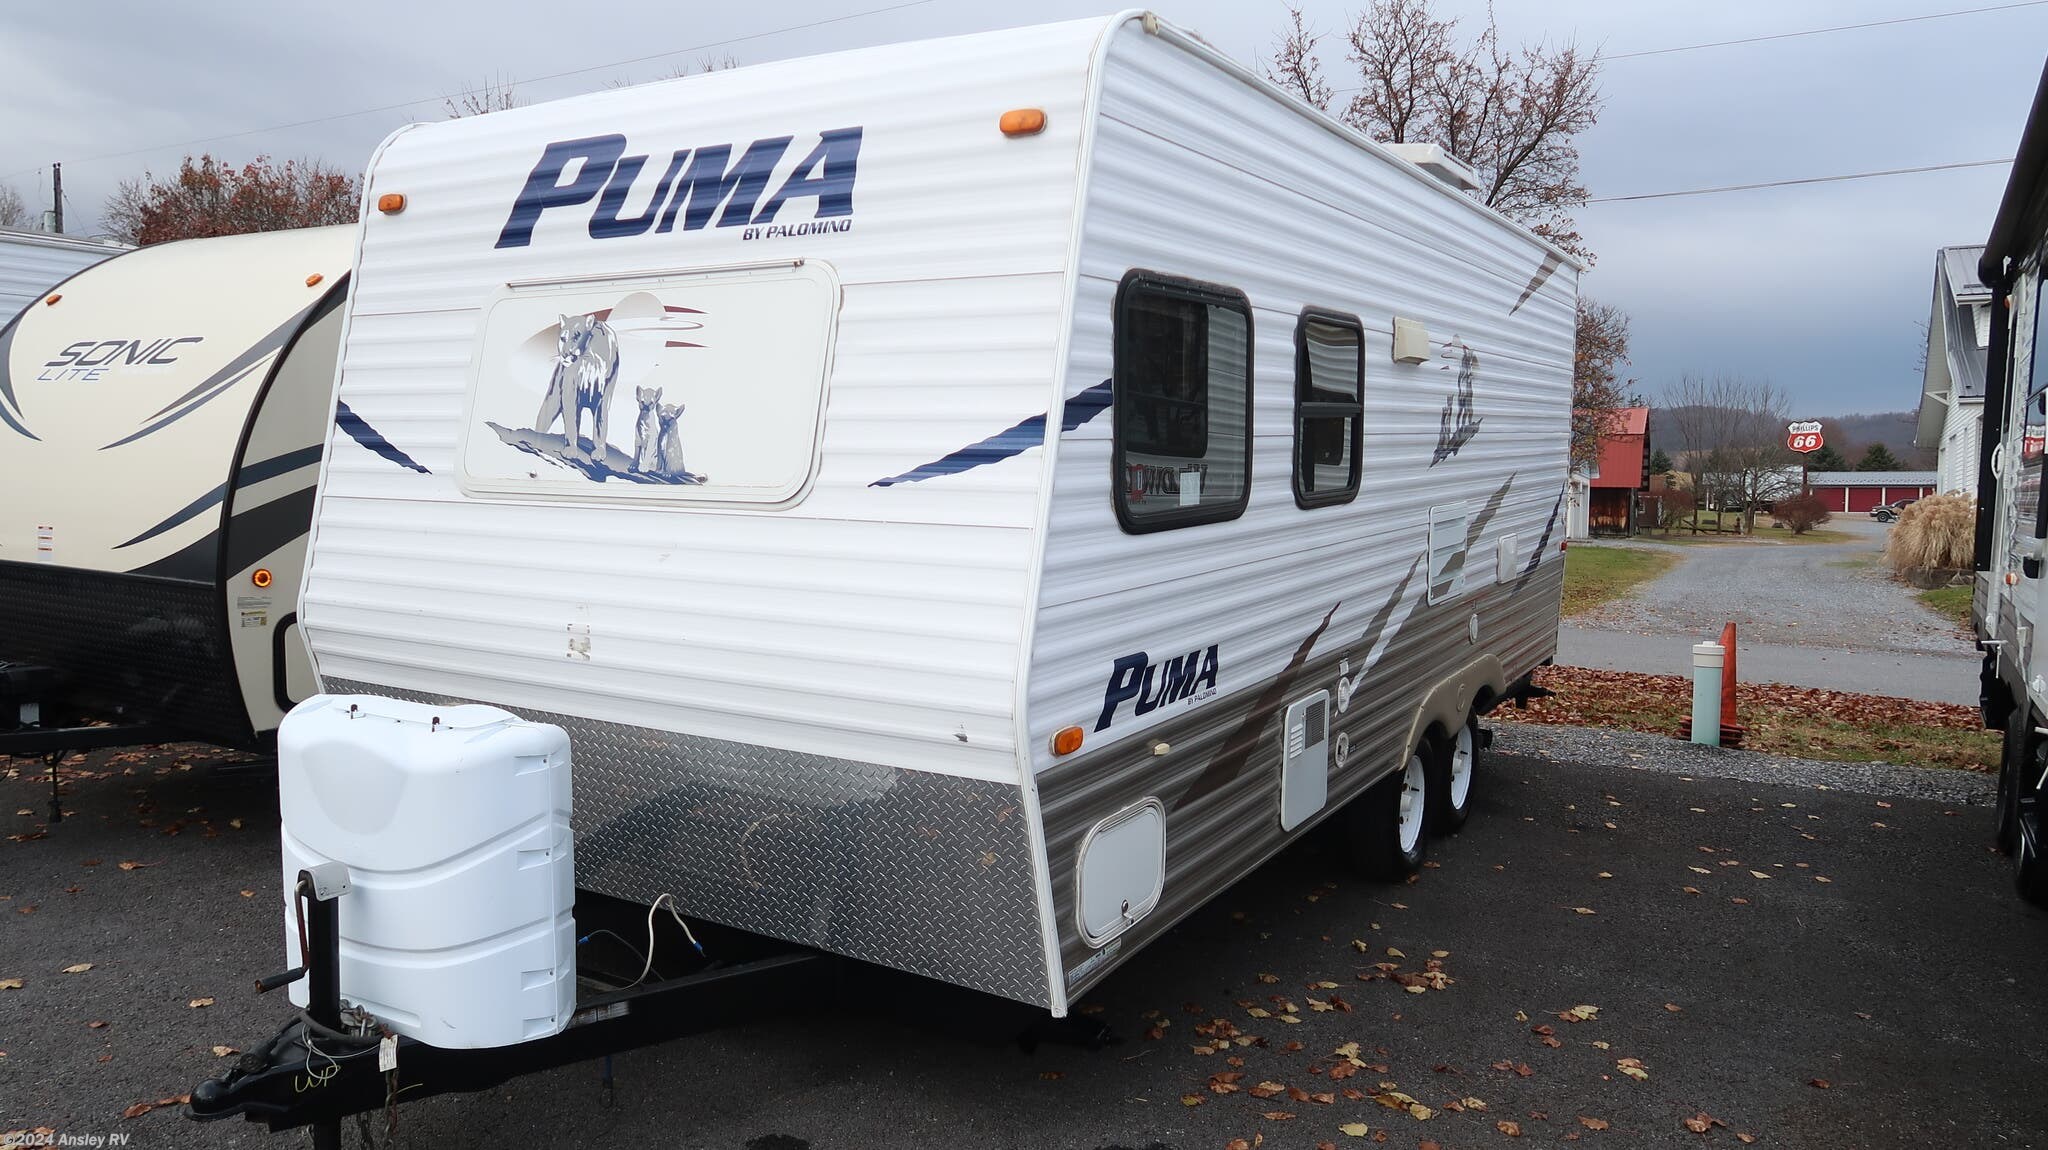 19 ft puma travel trailer